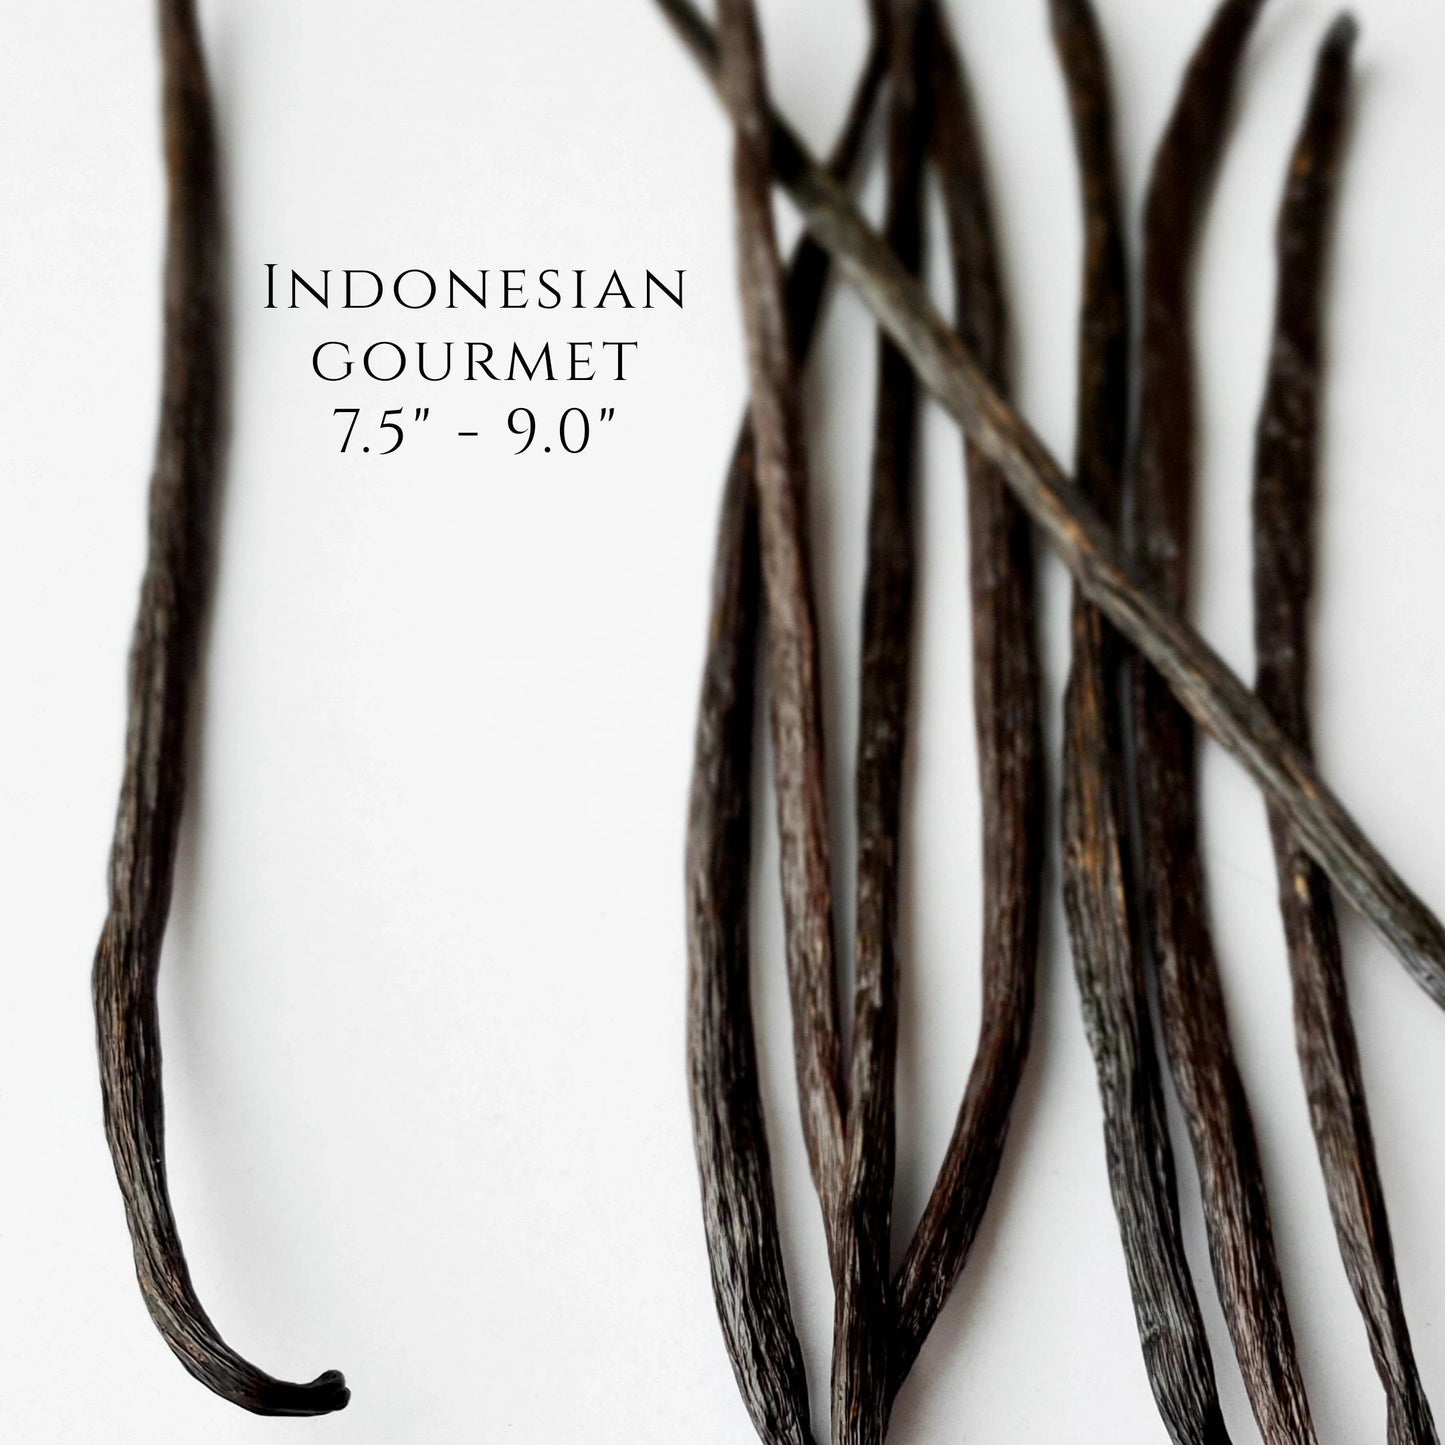 Indonesia V. planifolia Gourmet Vanilla Beans